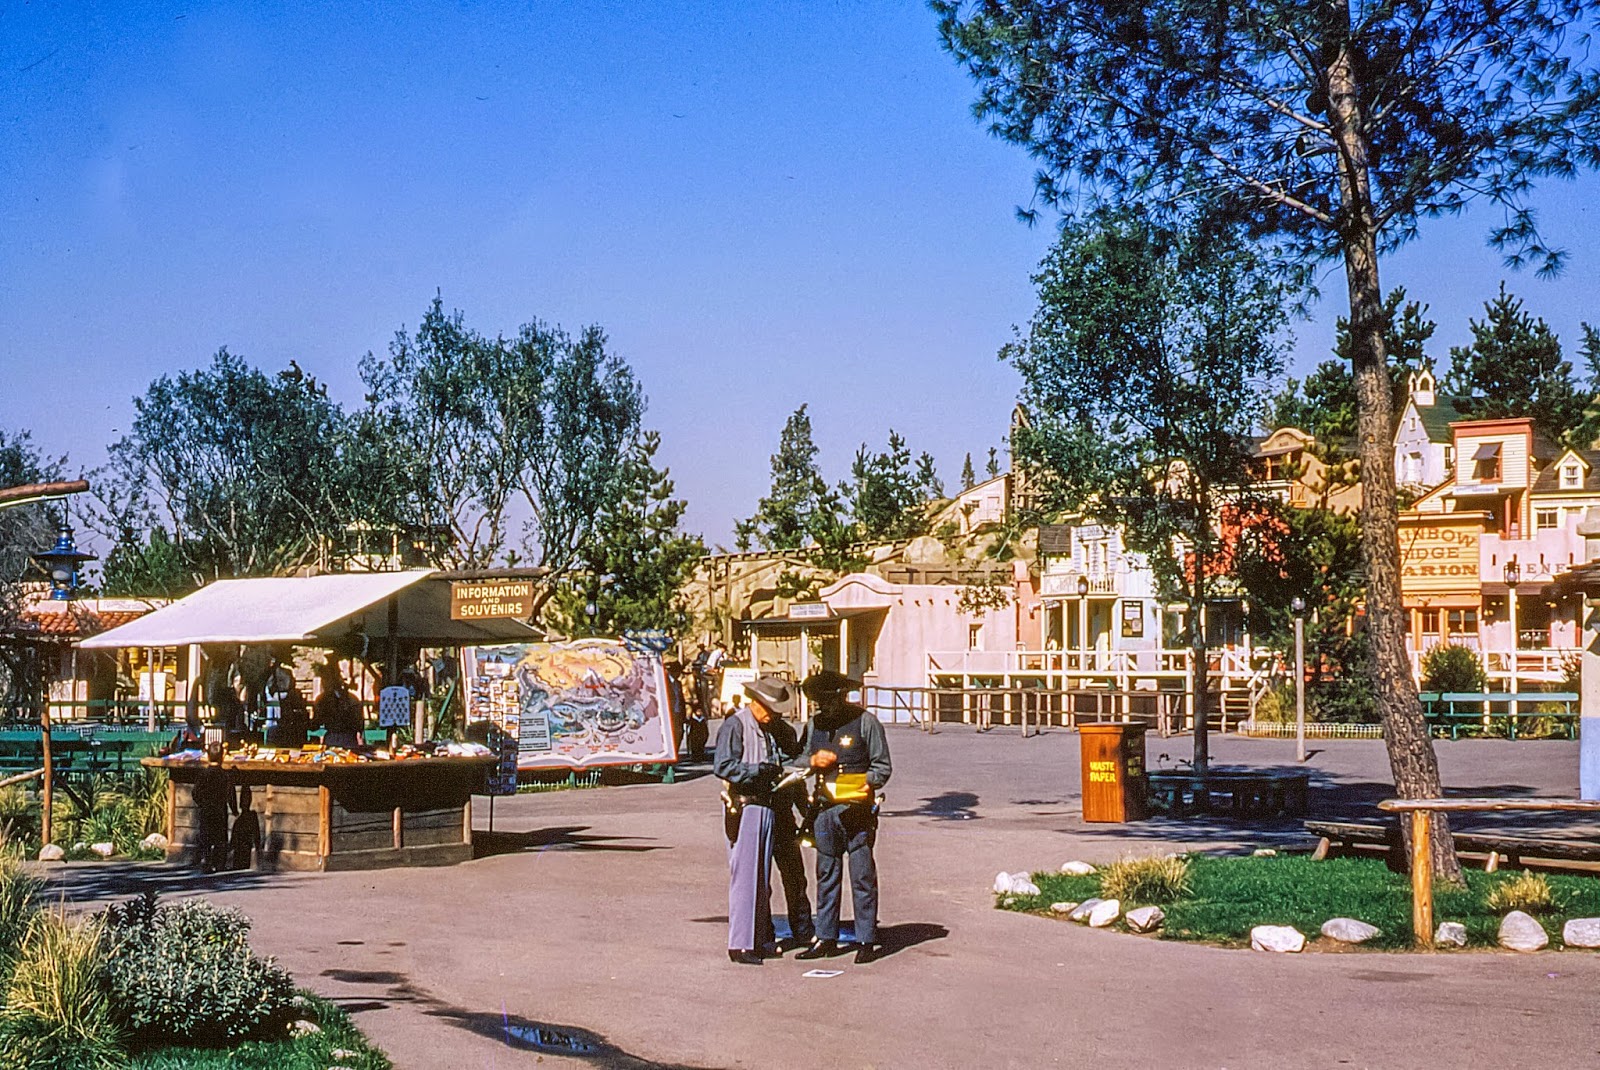 MickeyPhotos: Disneyland Frontierland in 1957